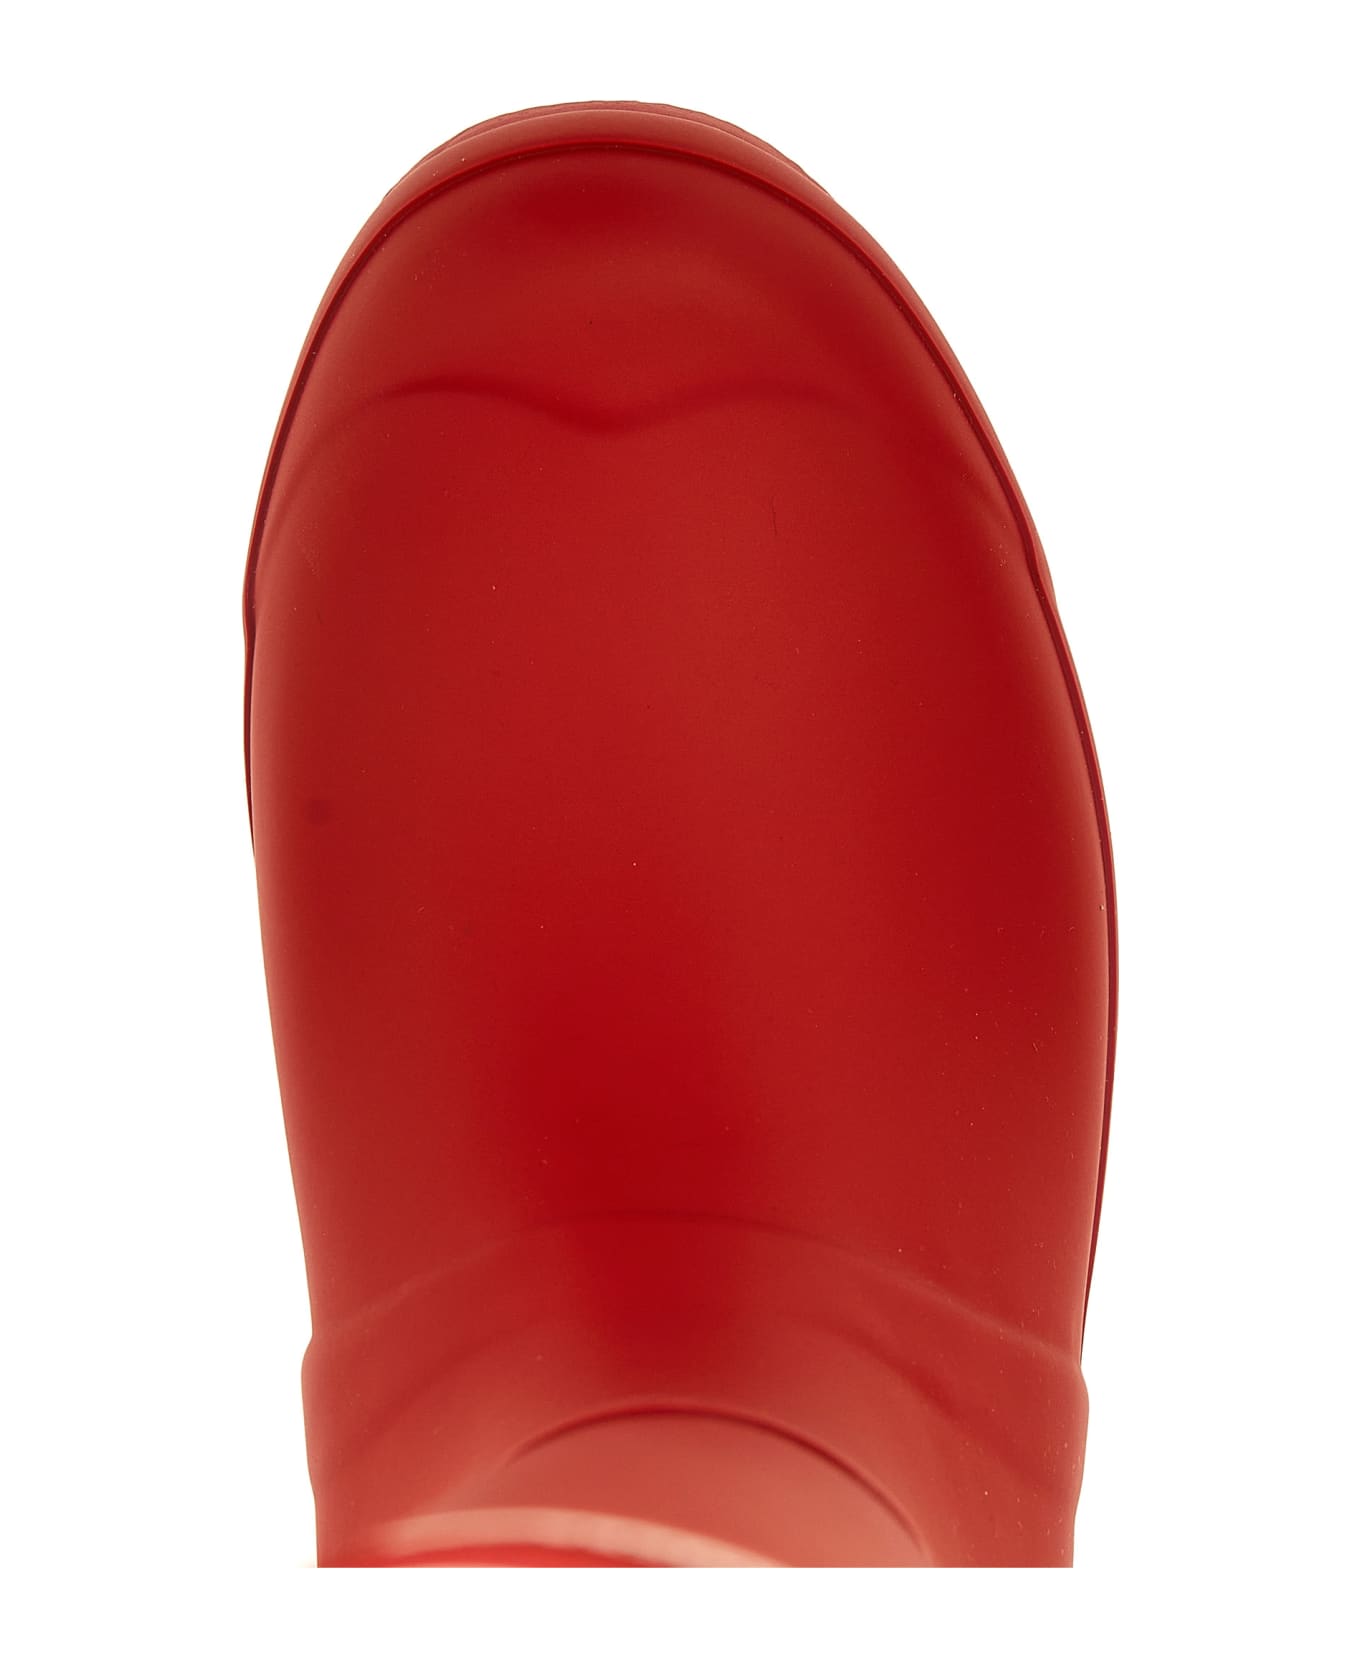 Kenzo Hunter Wellington Boots - Red